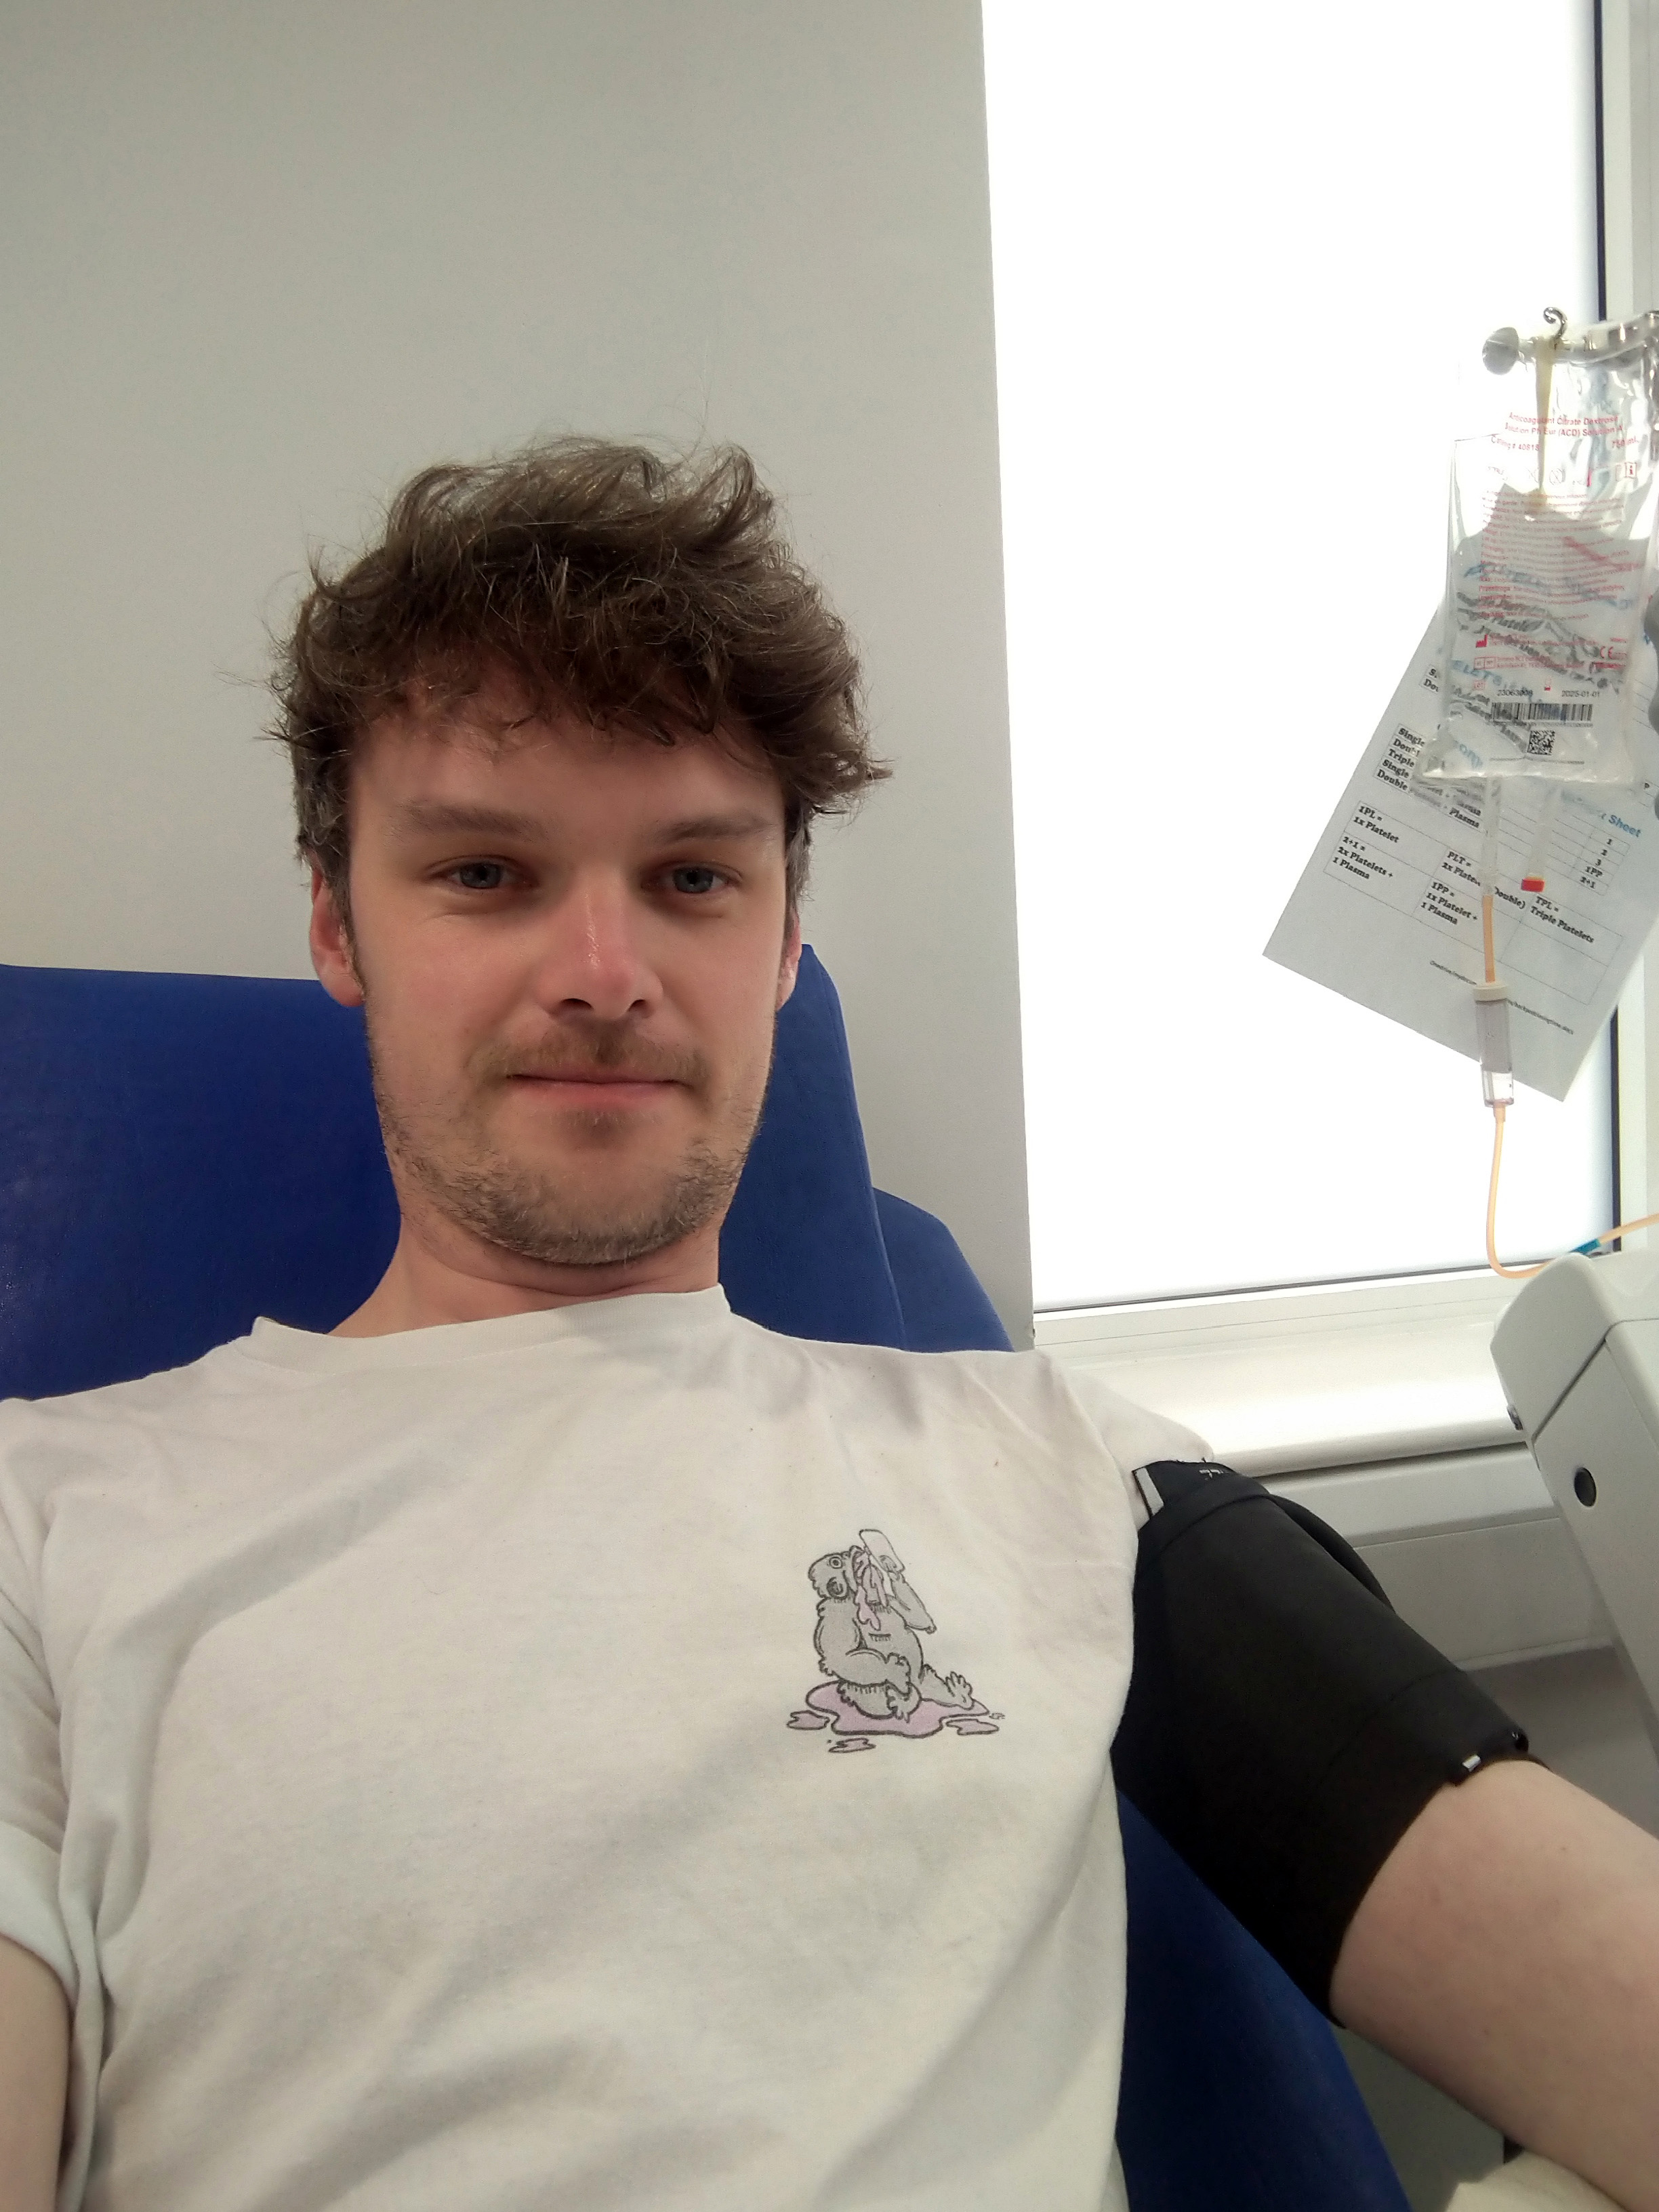 Josh donating platelets